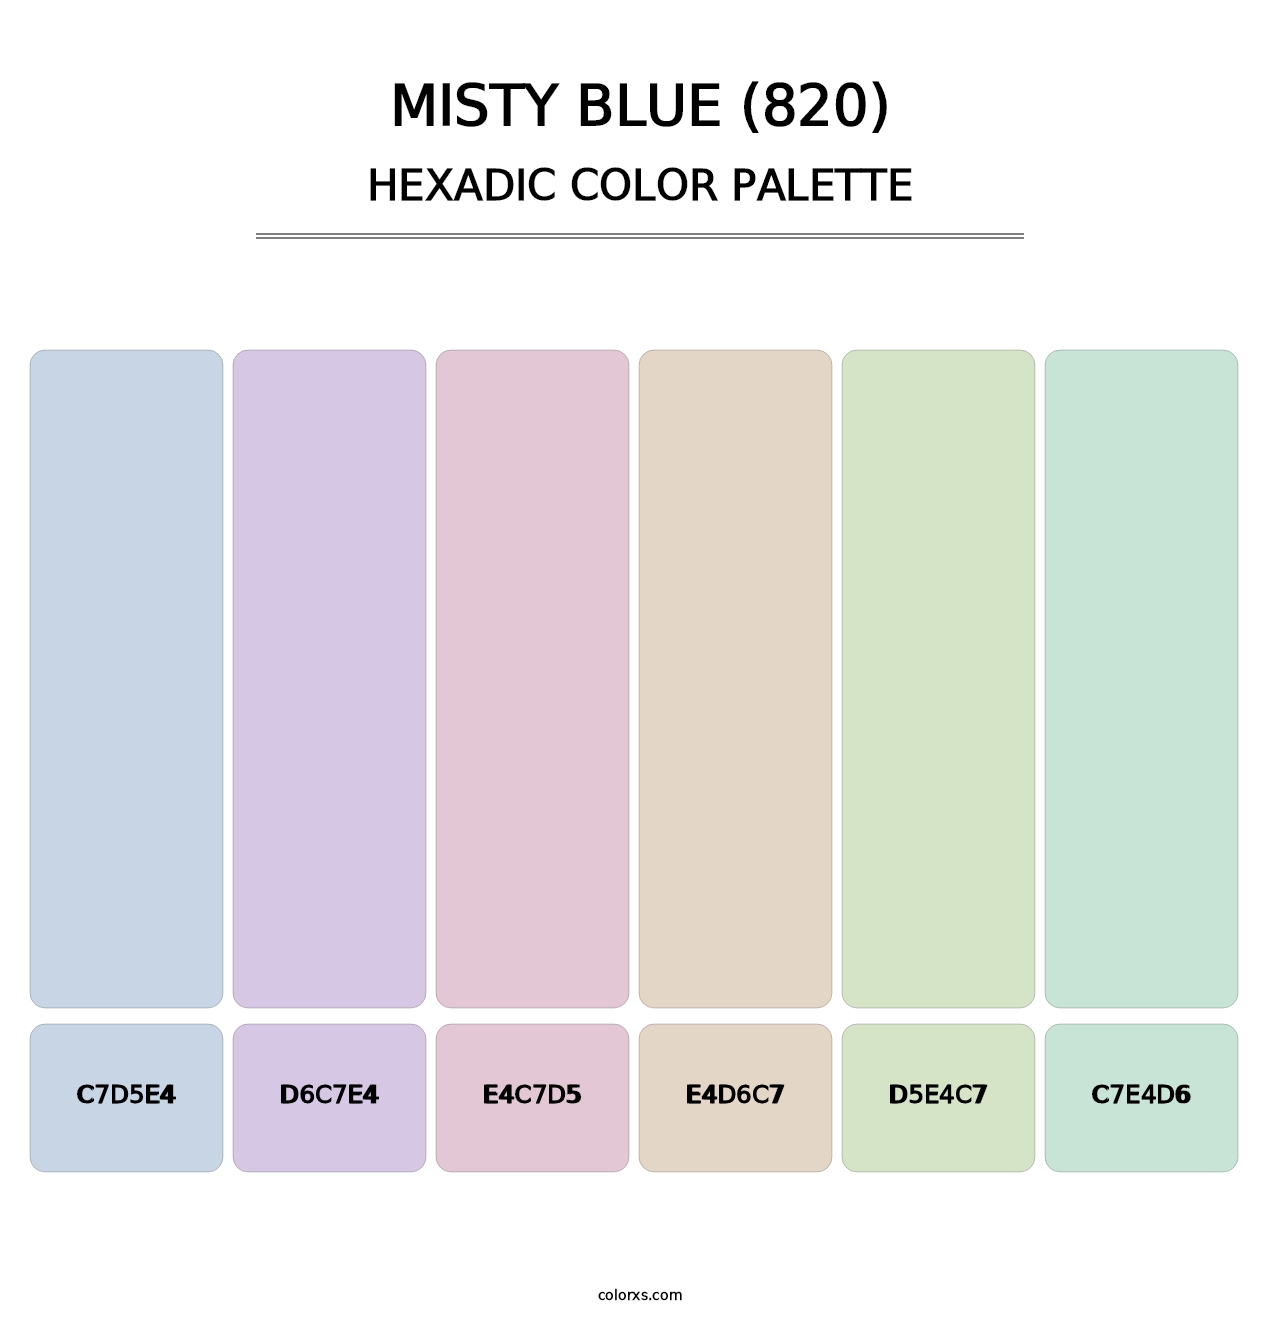 Misty Blue (820) - Hexadic Color Palette